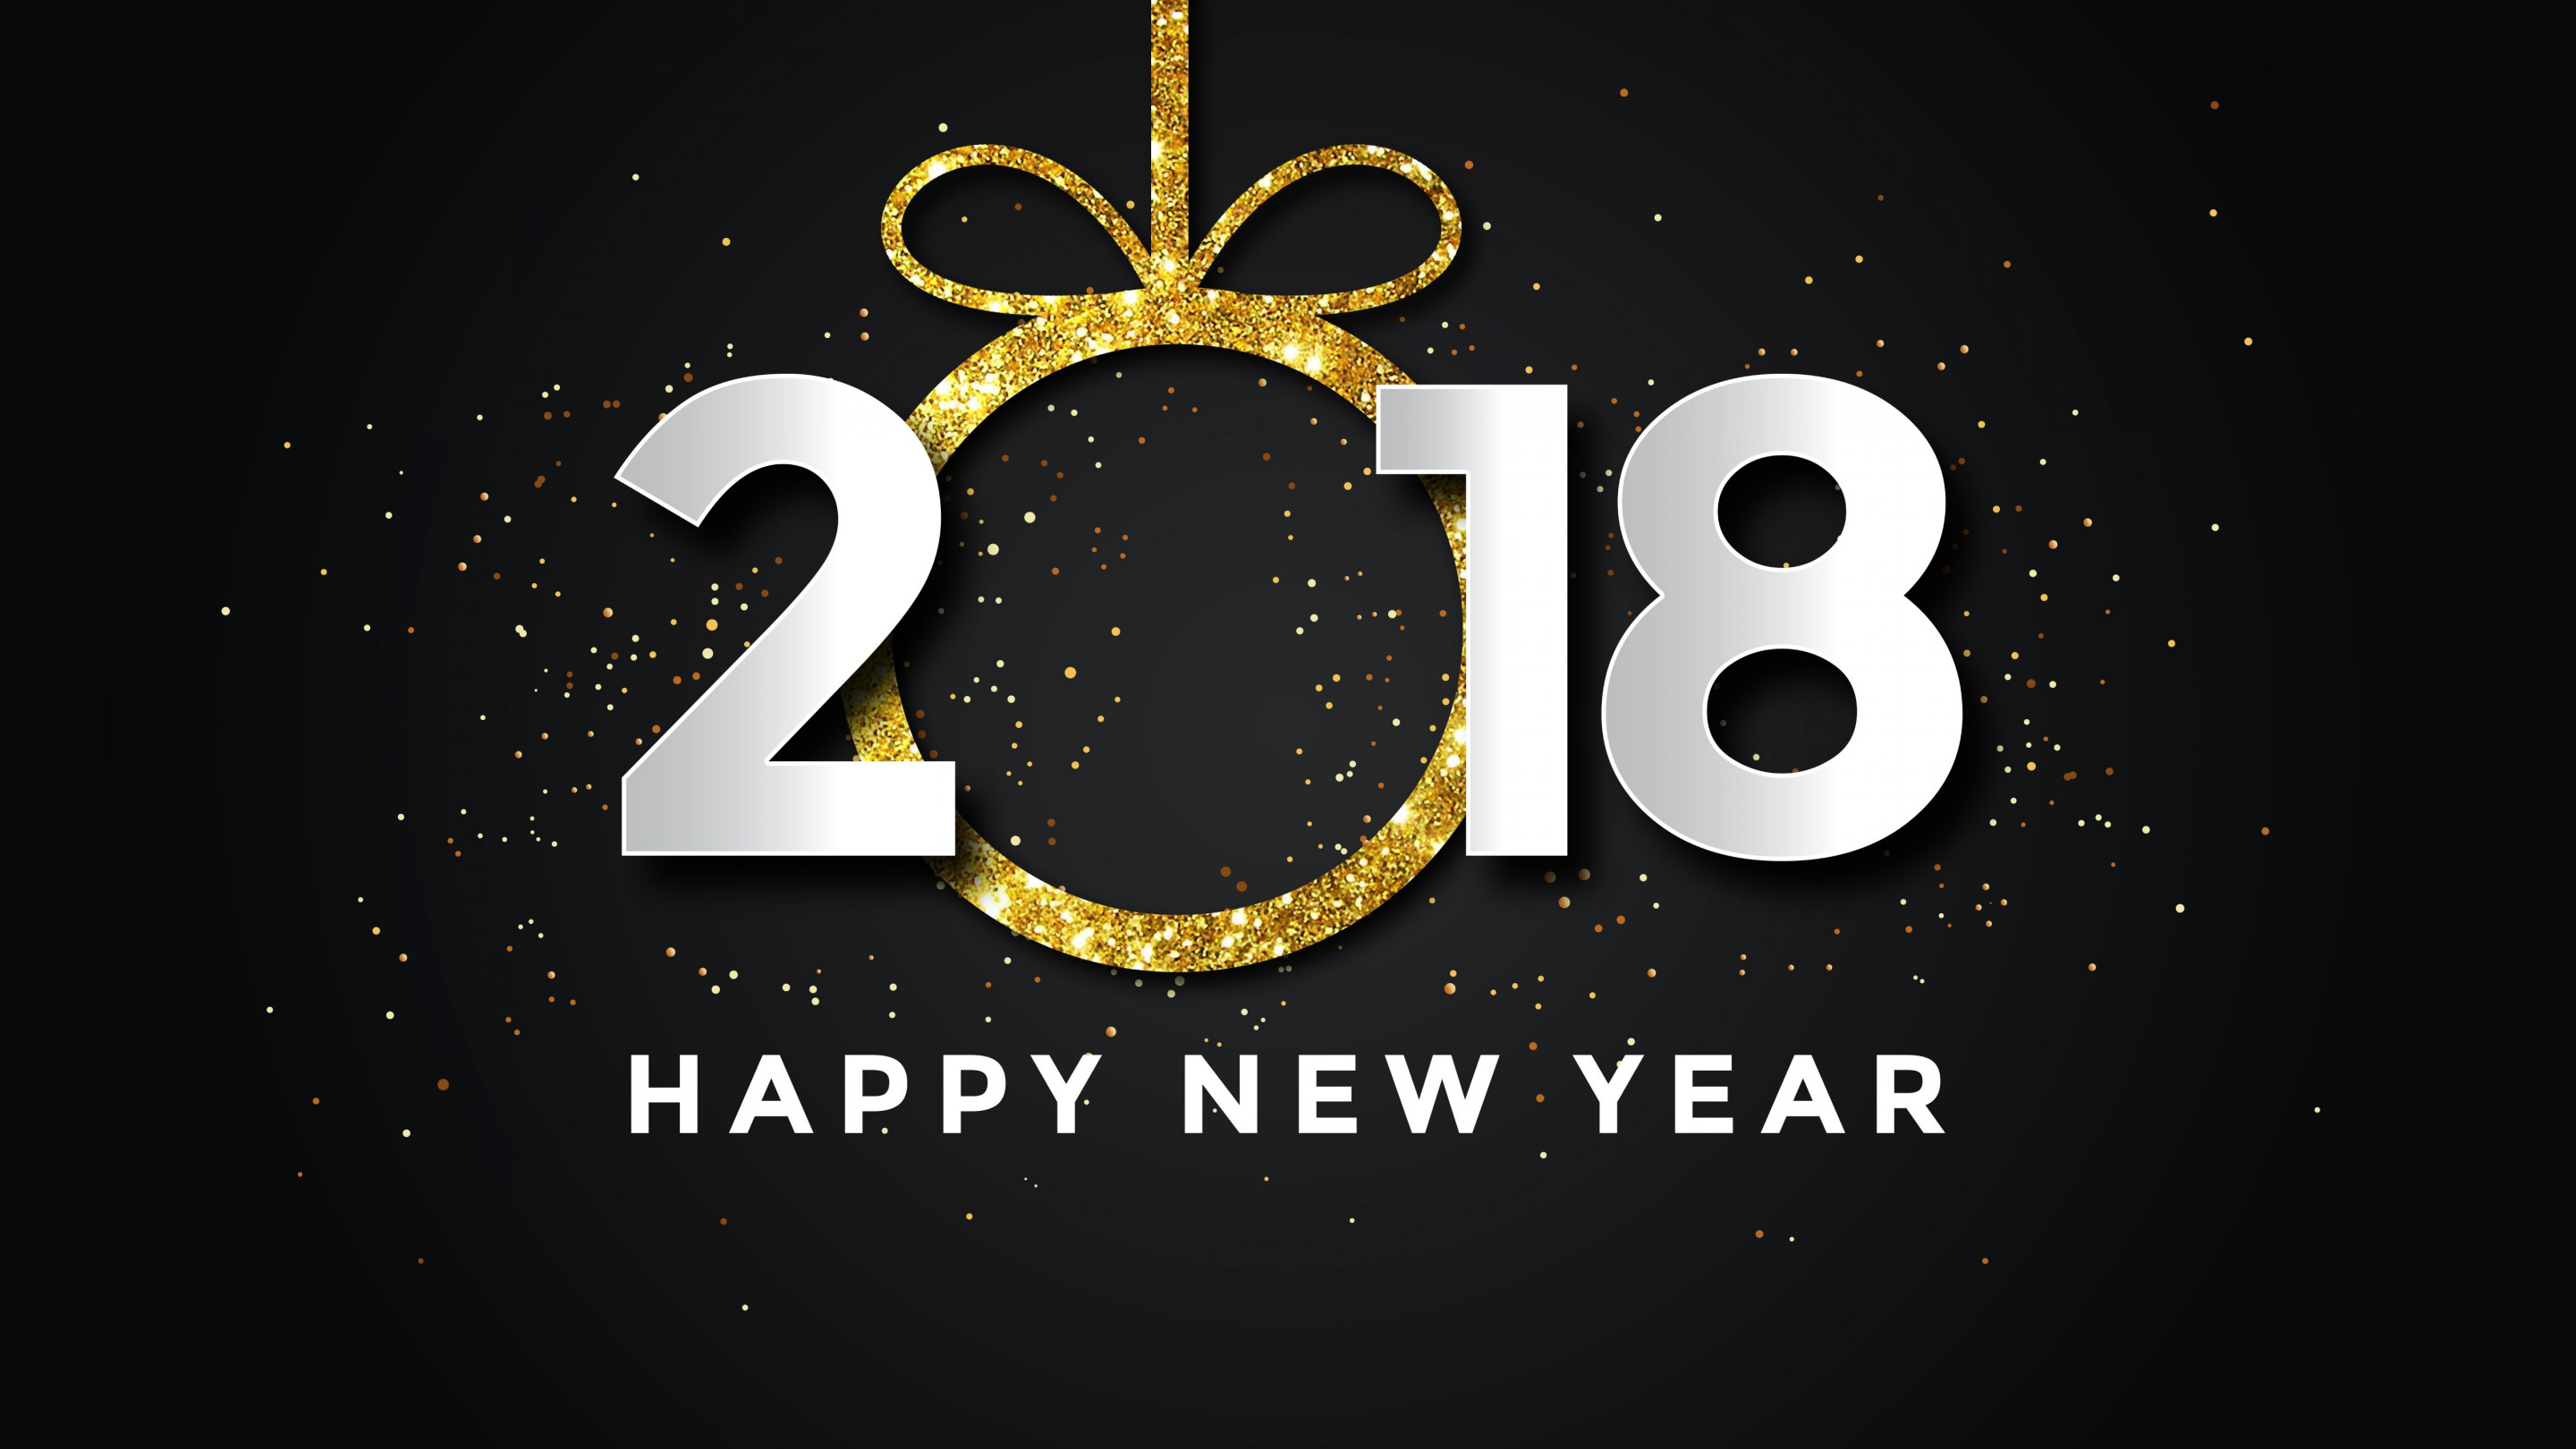 Happy New Year 2018 wallpaper 2880x1620